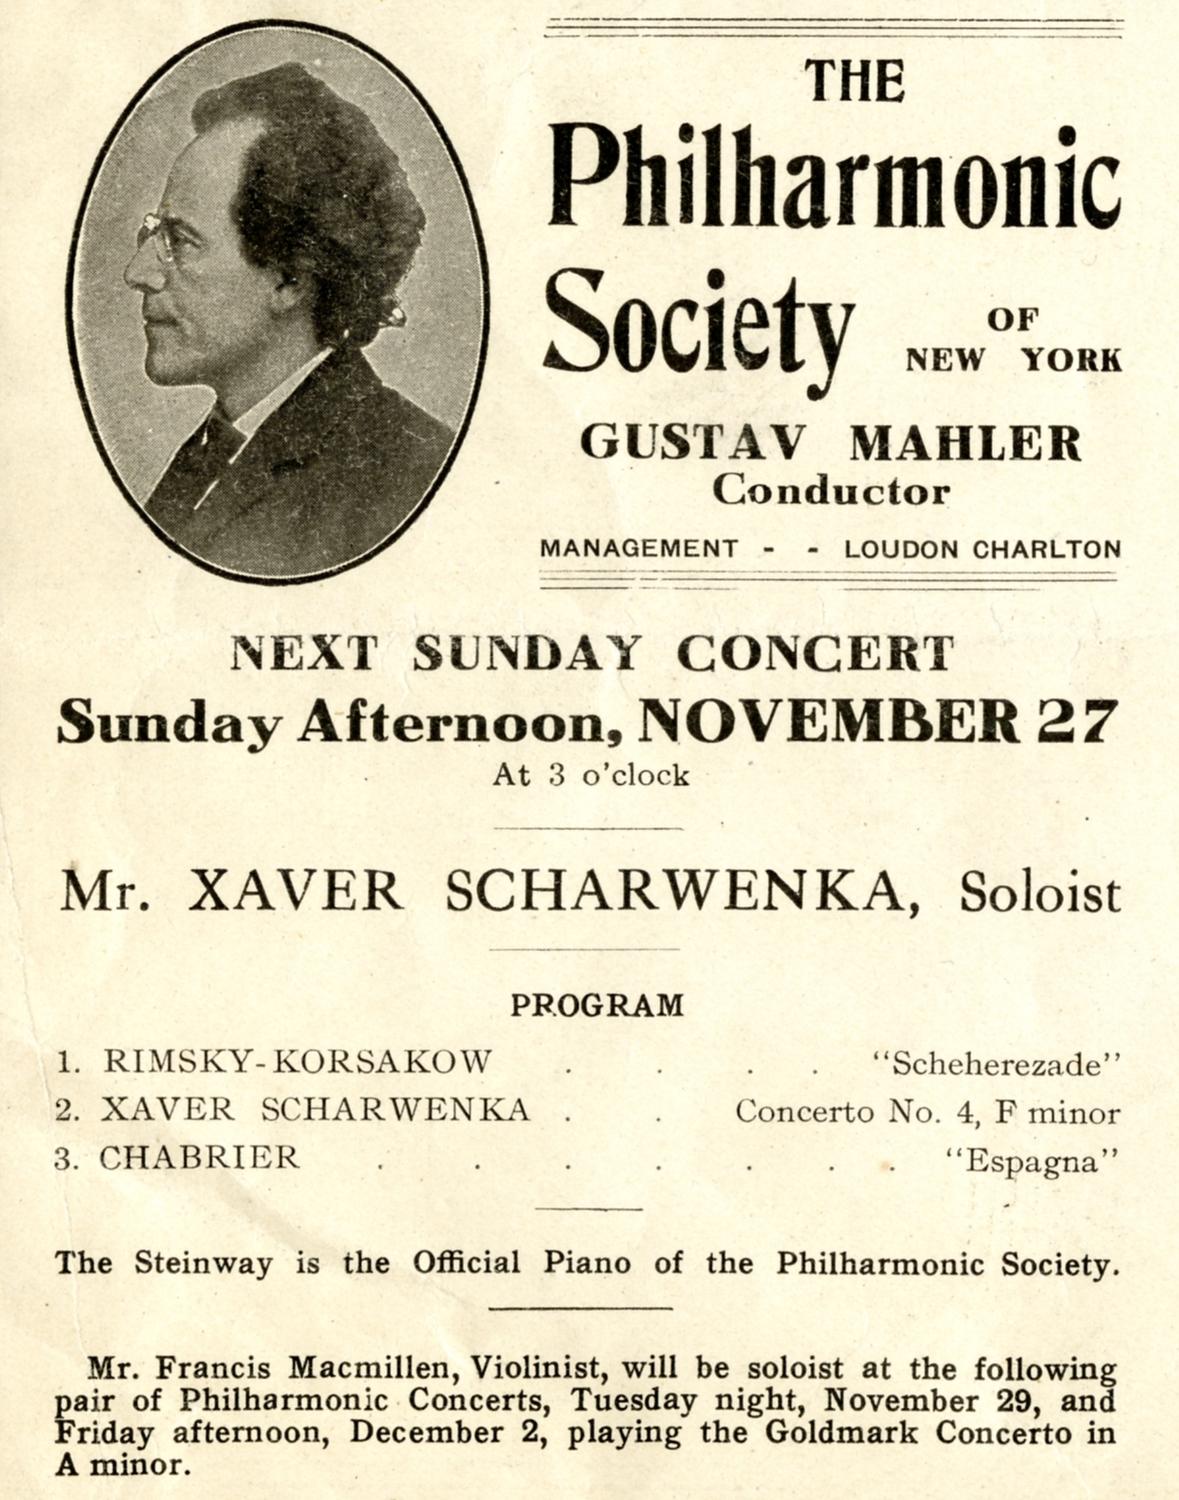 Gustav Mahler, with Philharmonic Society of New York, November 27, 1910